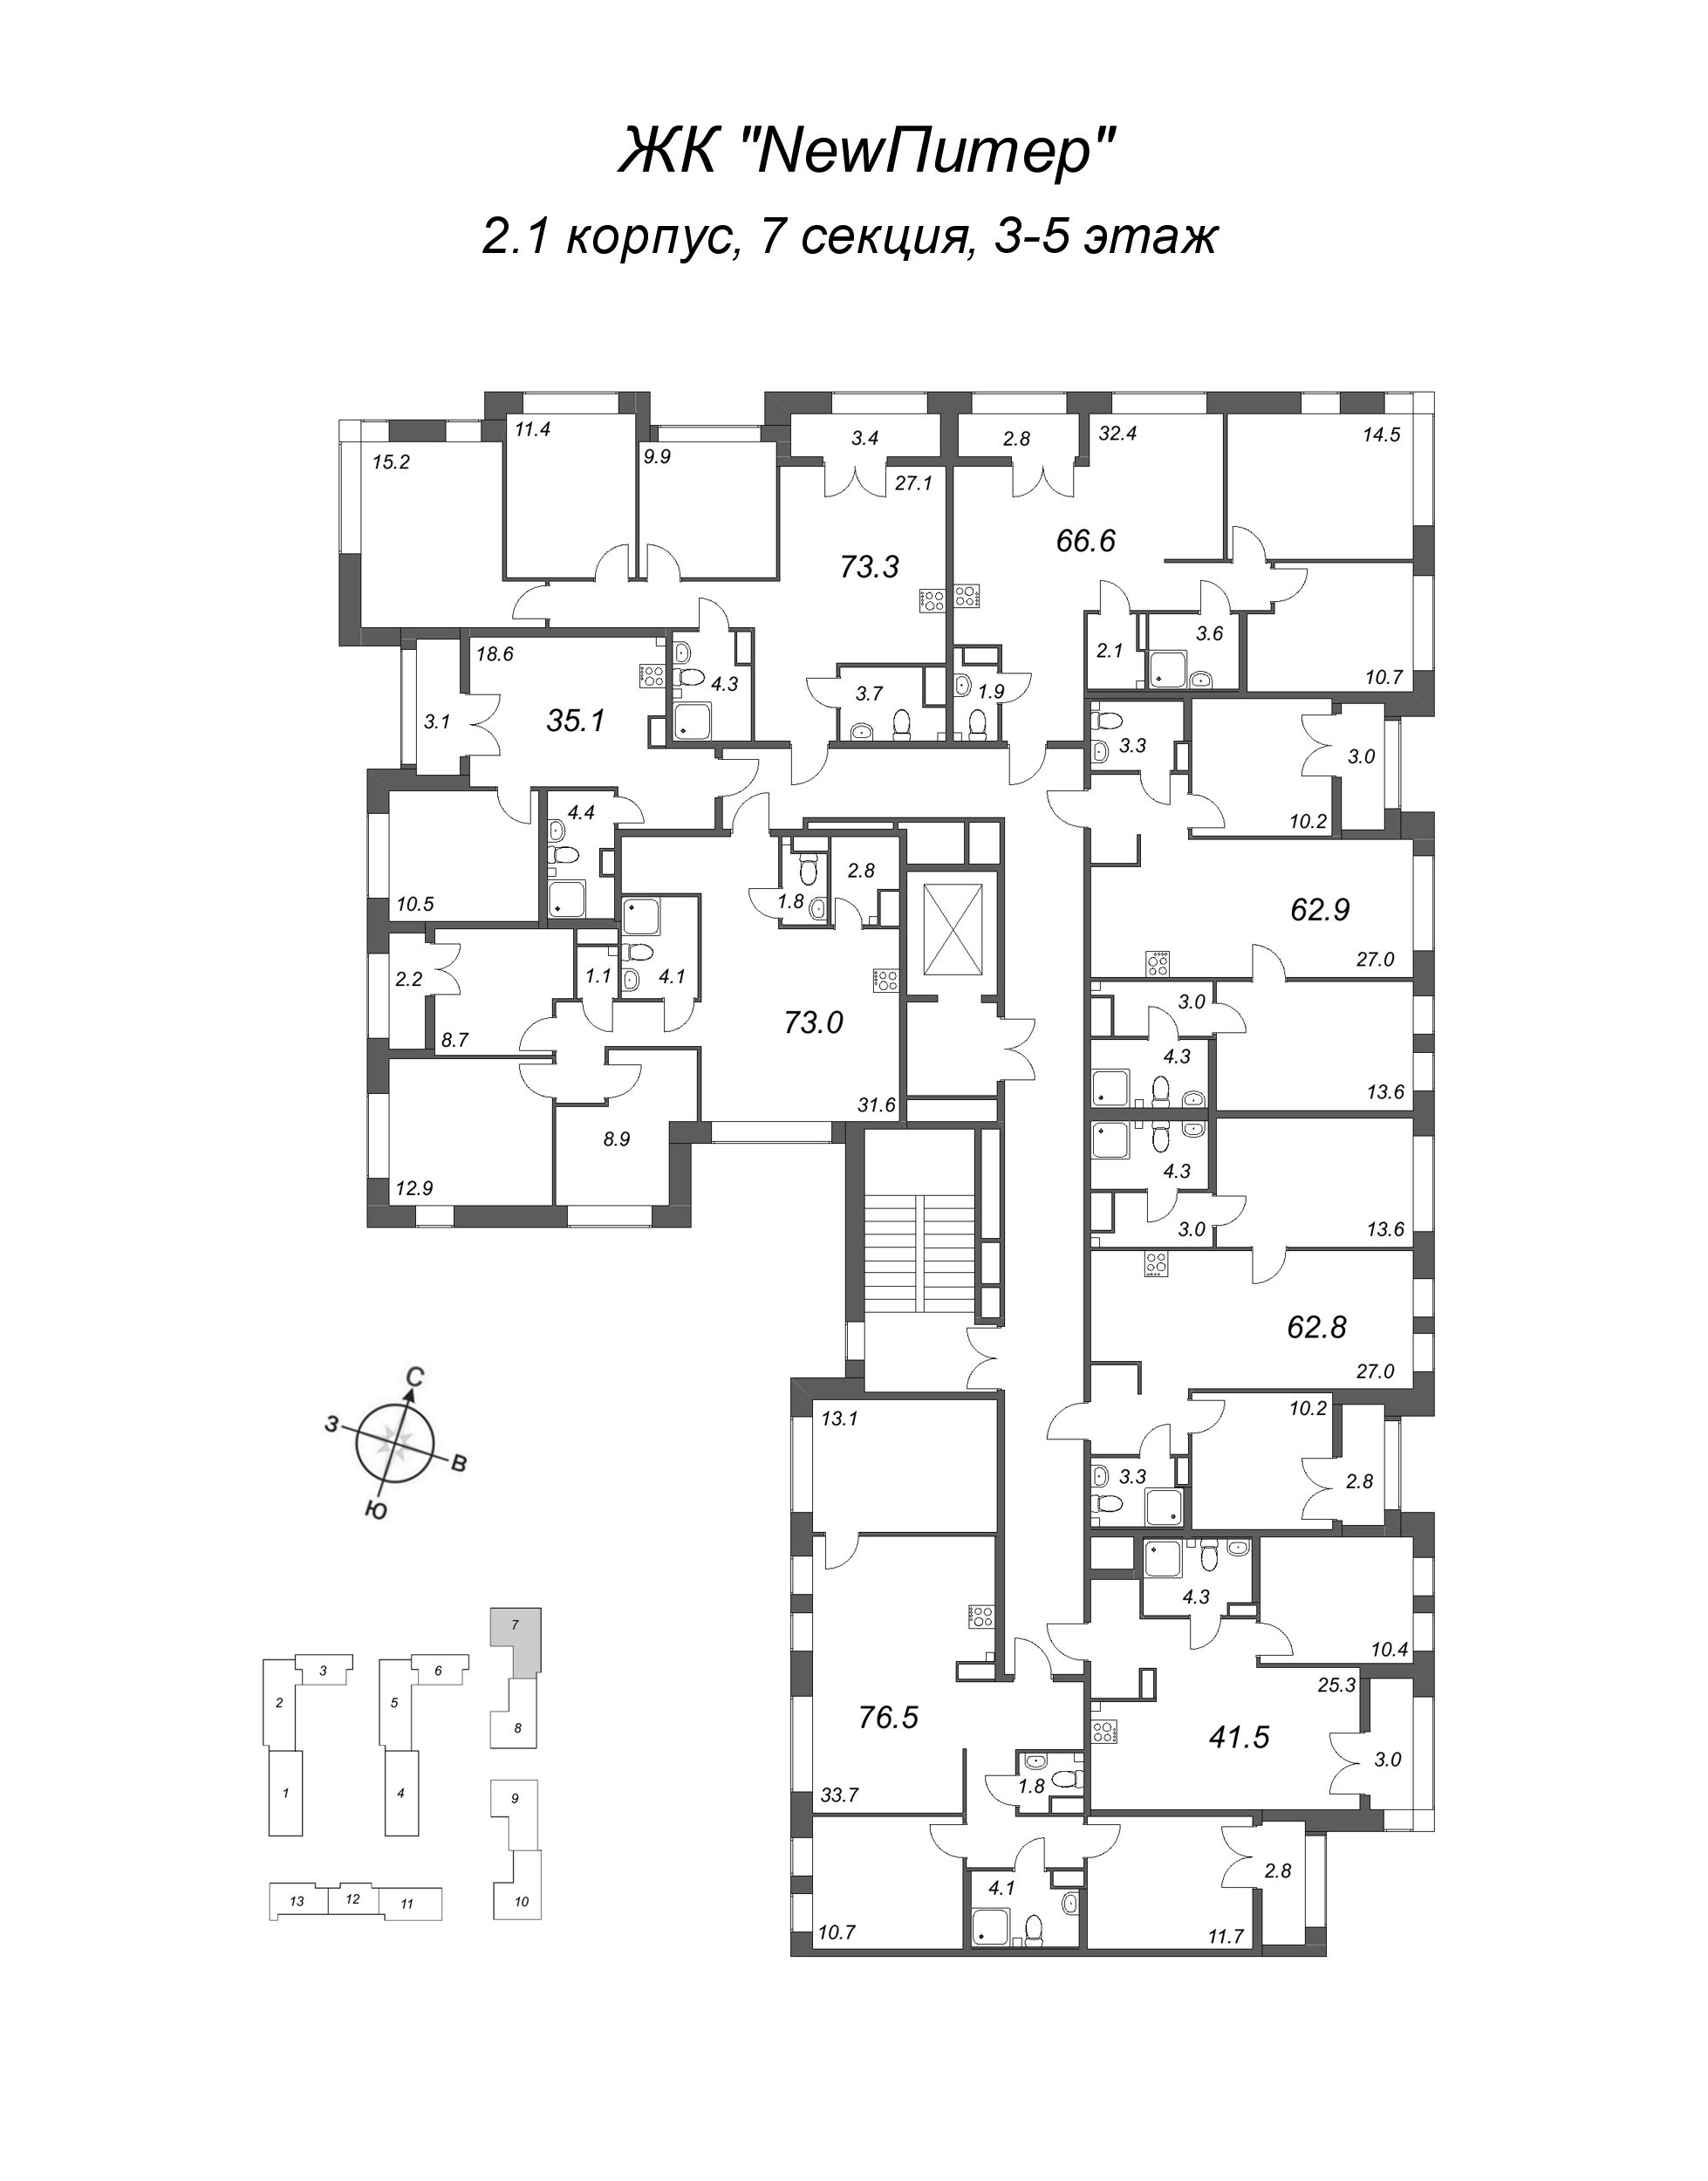 4-комнатная (Евро) квартира, 73 м² - планировка этажа